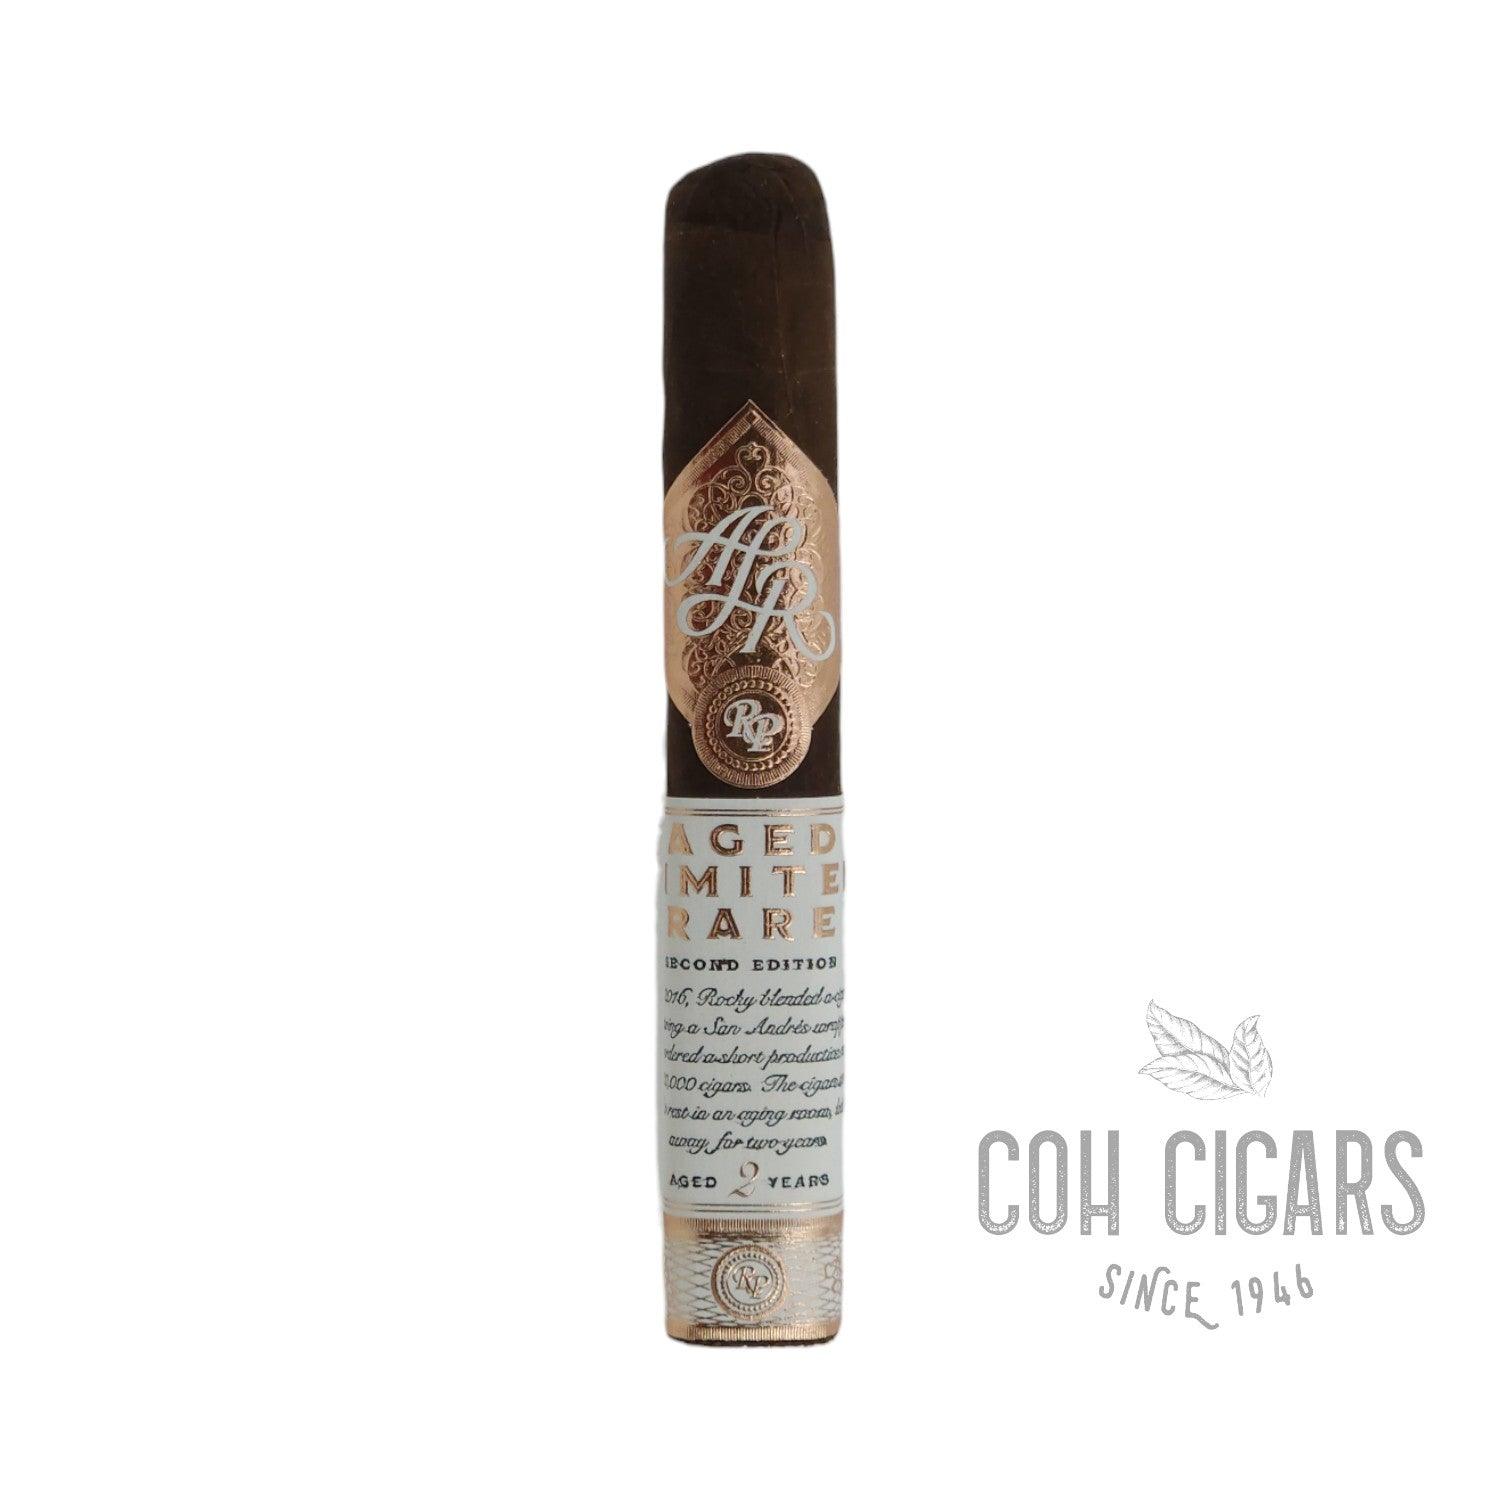 Rocky Patel Cigar | Second Edition Robusto | Box 20 - HK CohCigars